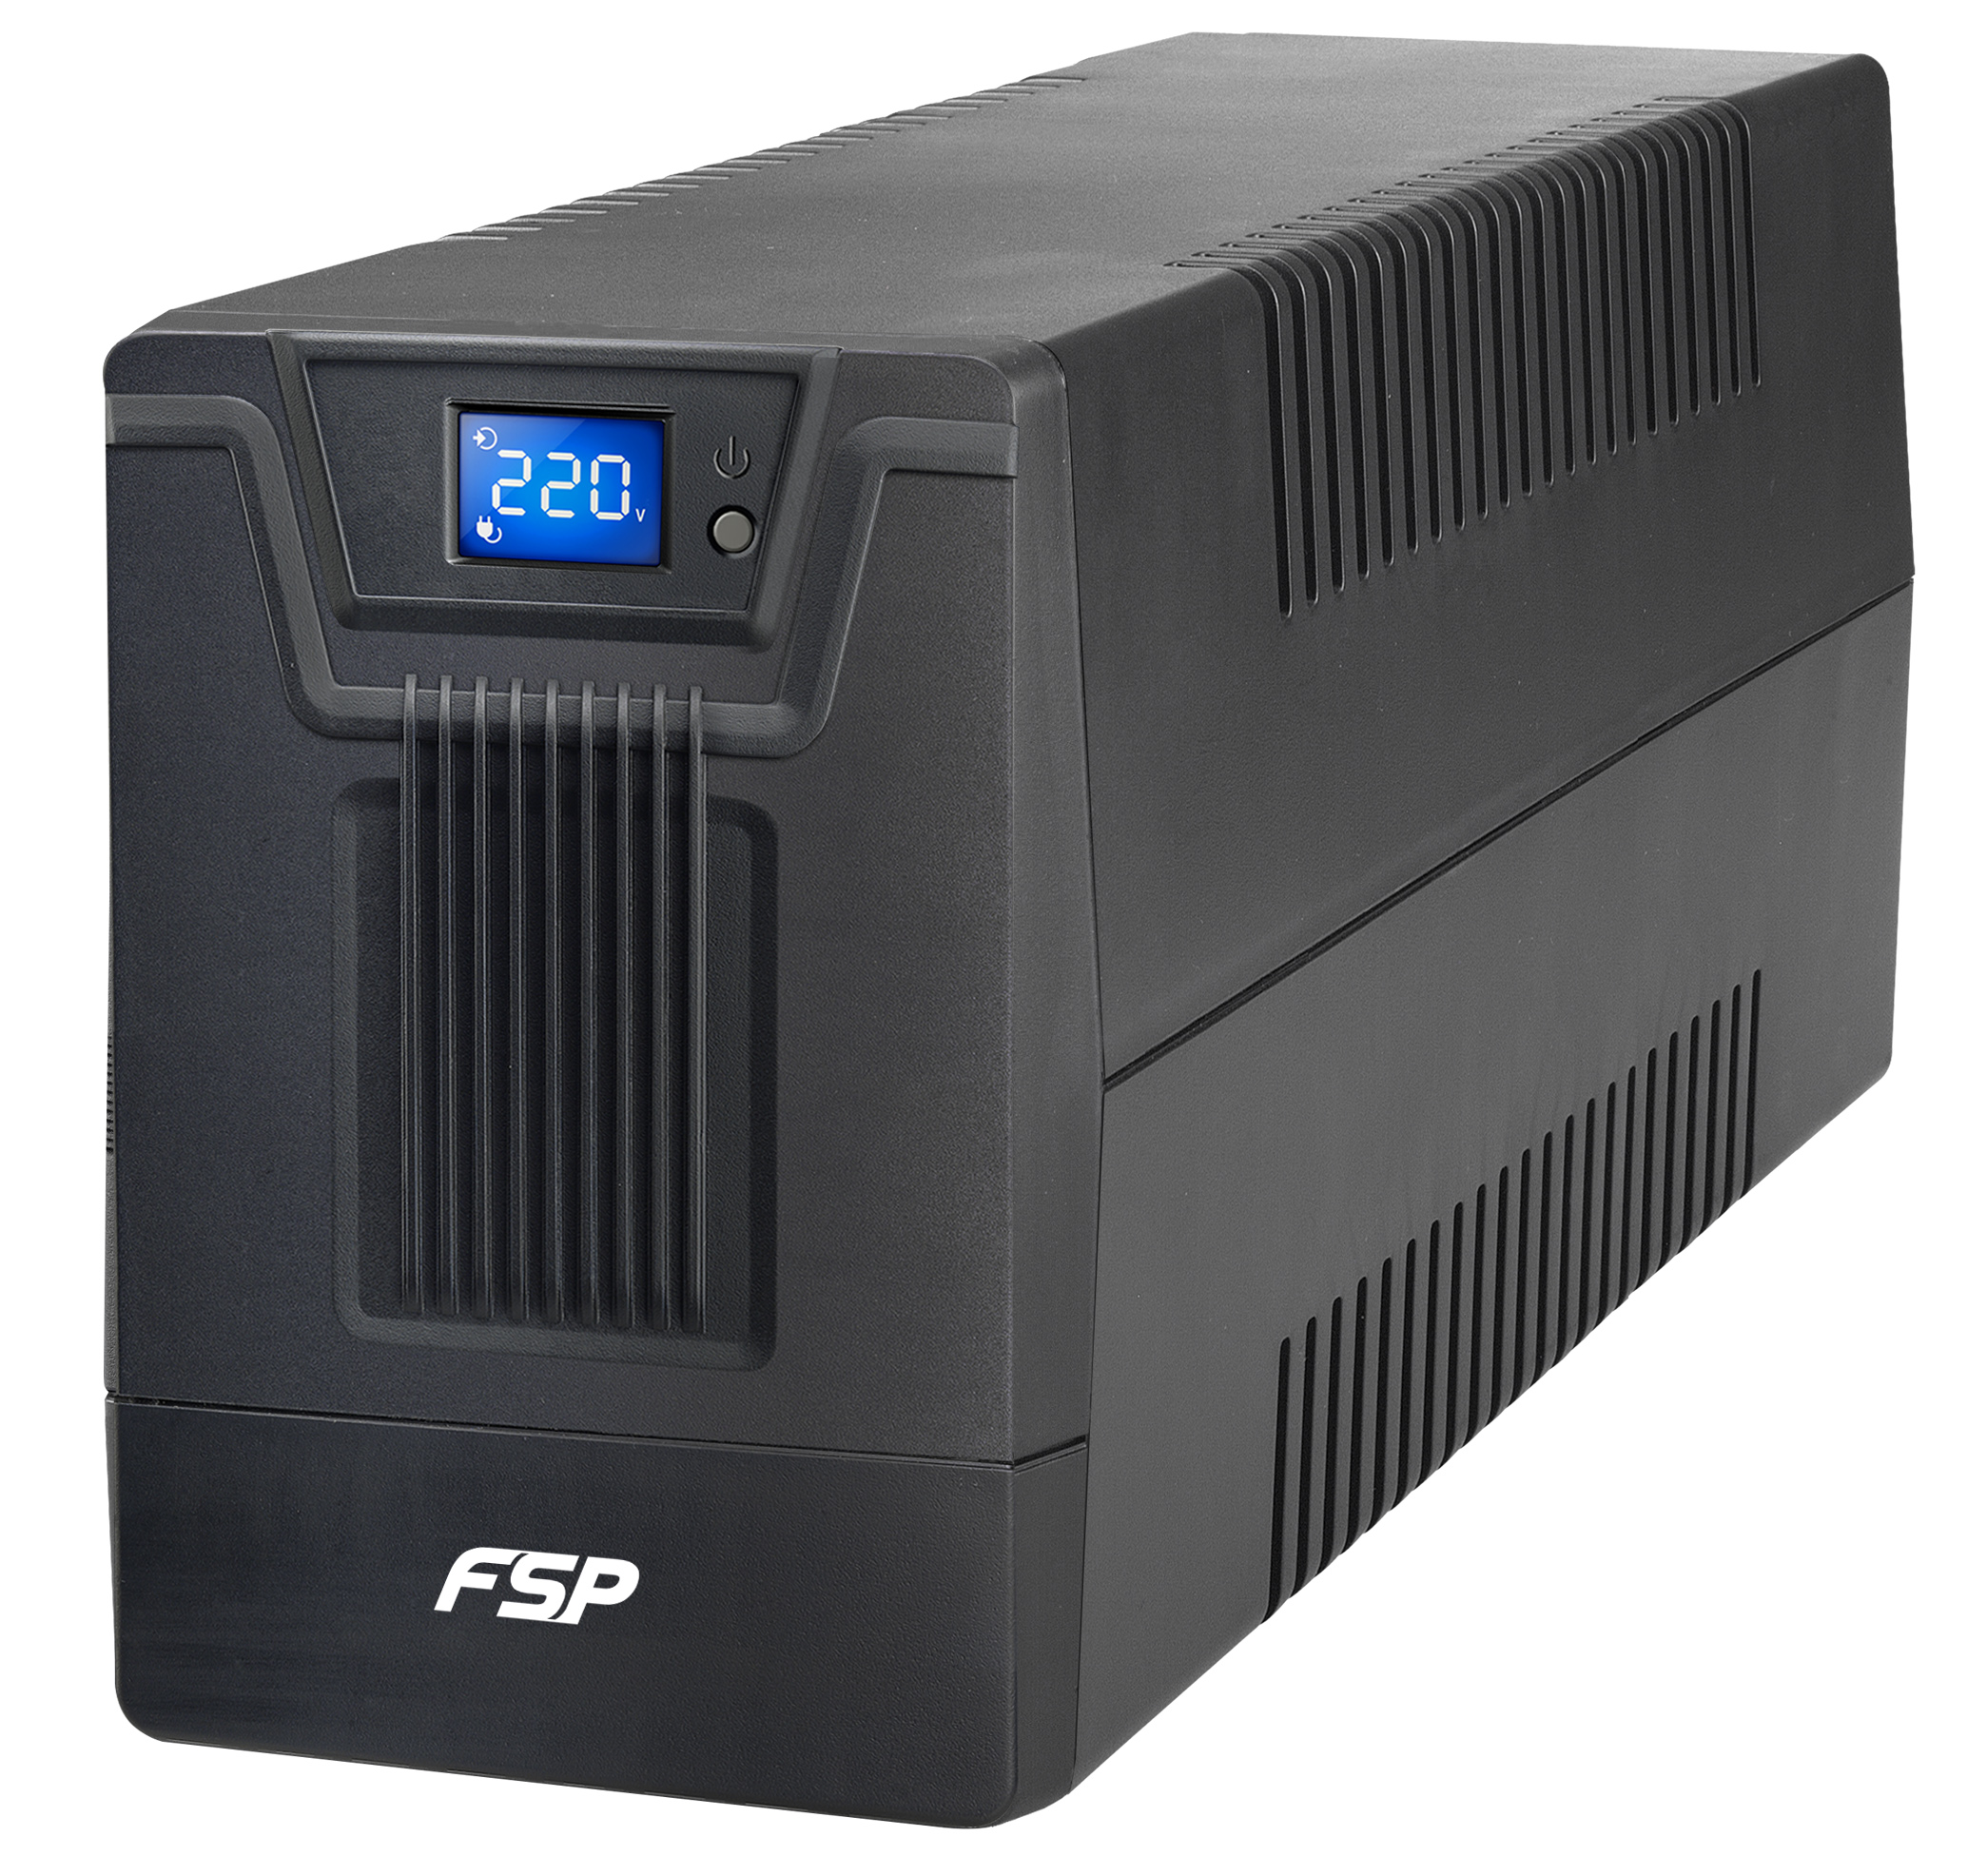 ИБП FSP DPV 1500, 1500 В·А, 900 Вт, EURO, розеток - 2, черный (PPF9001901)